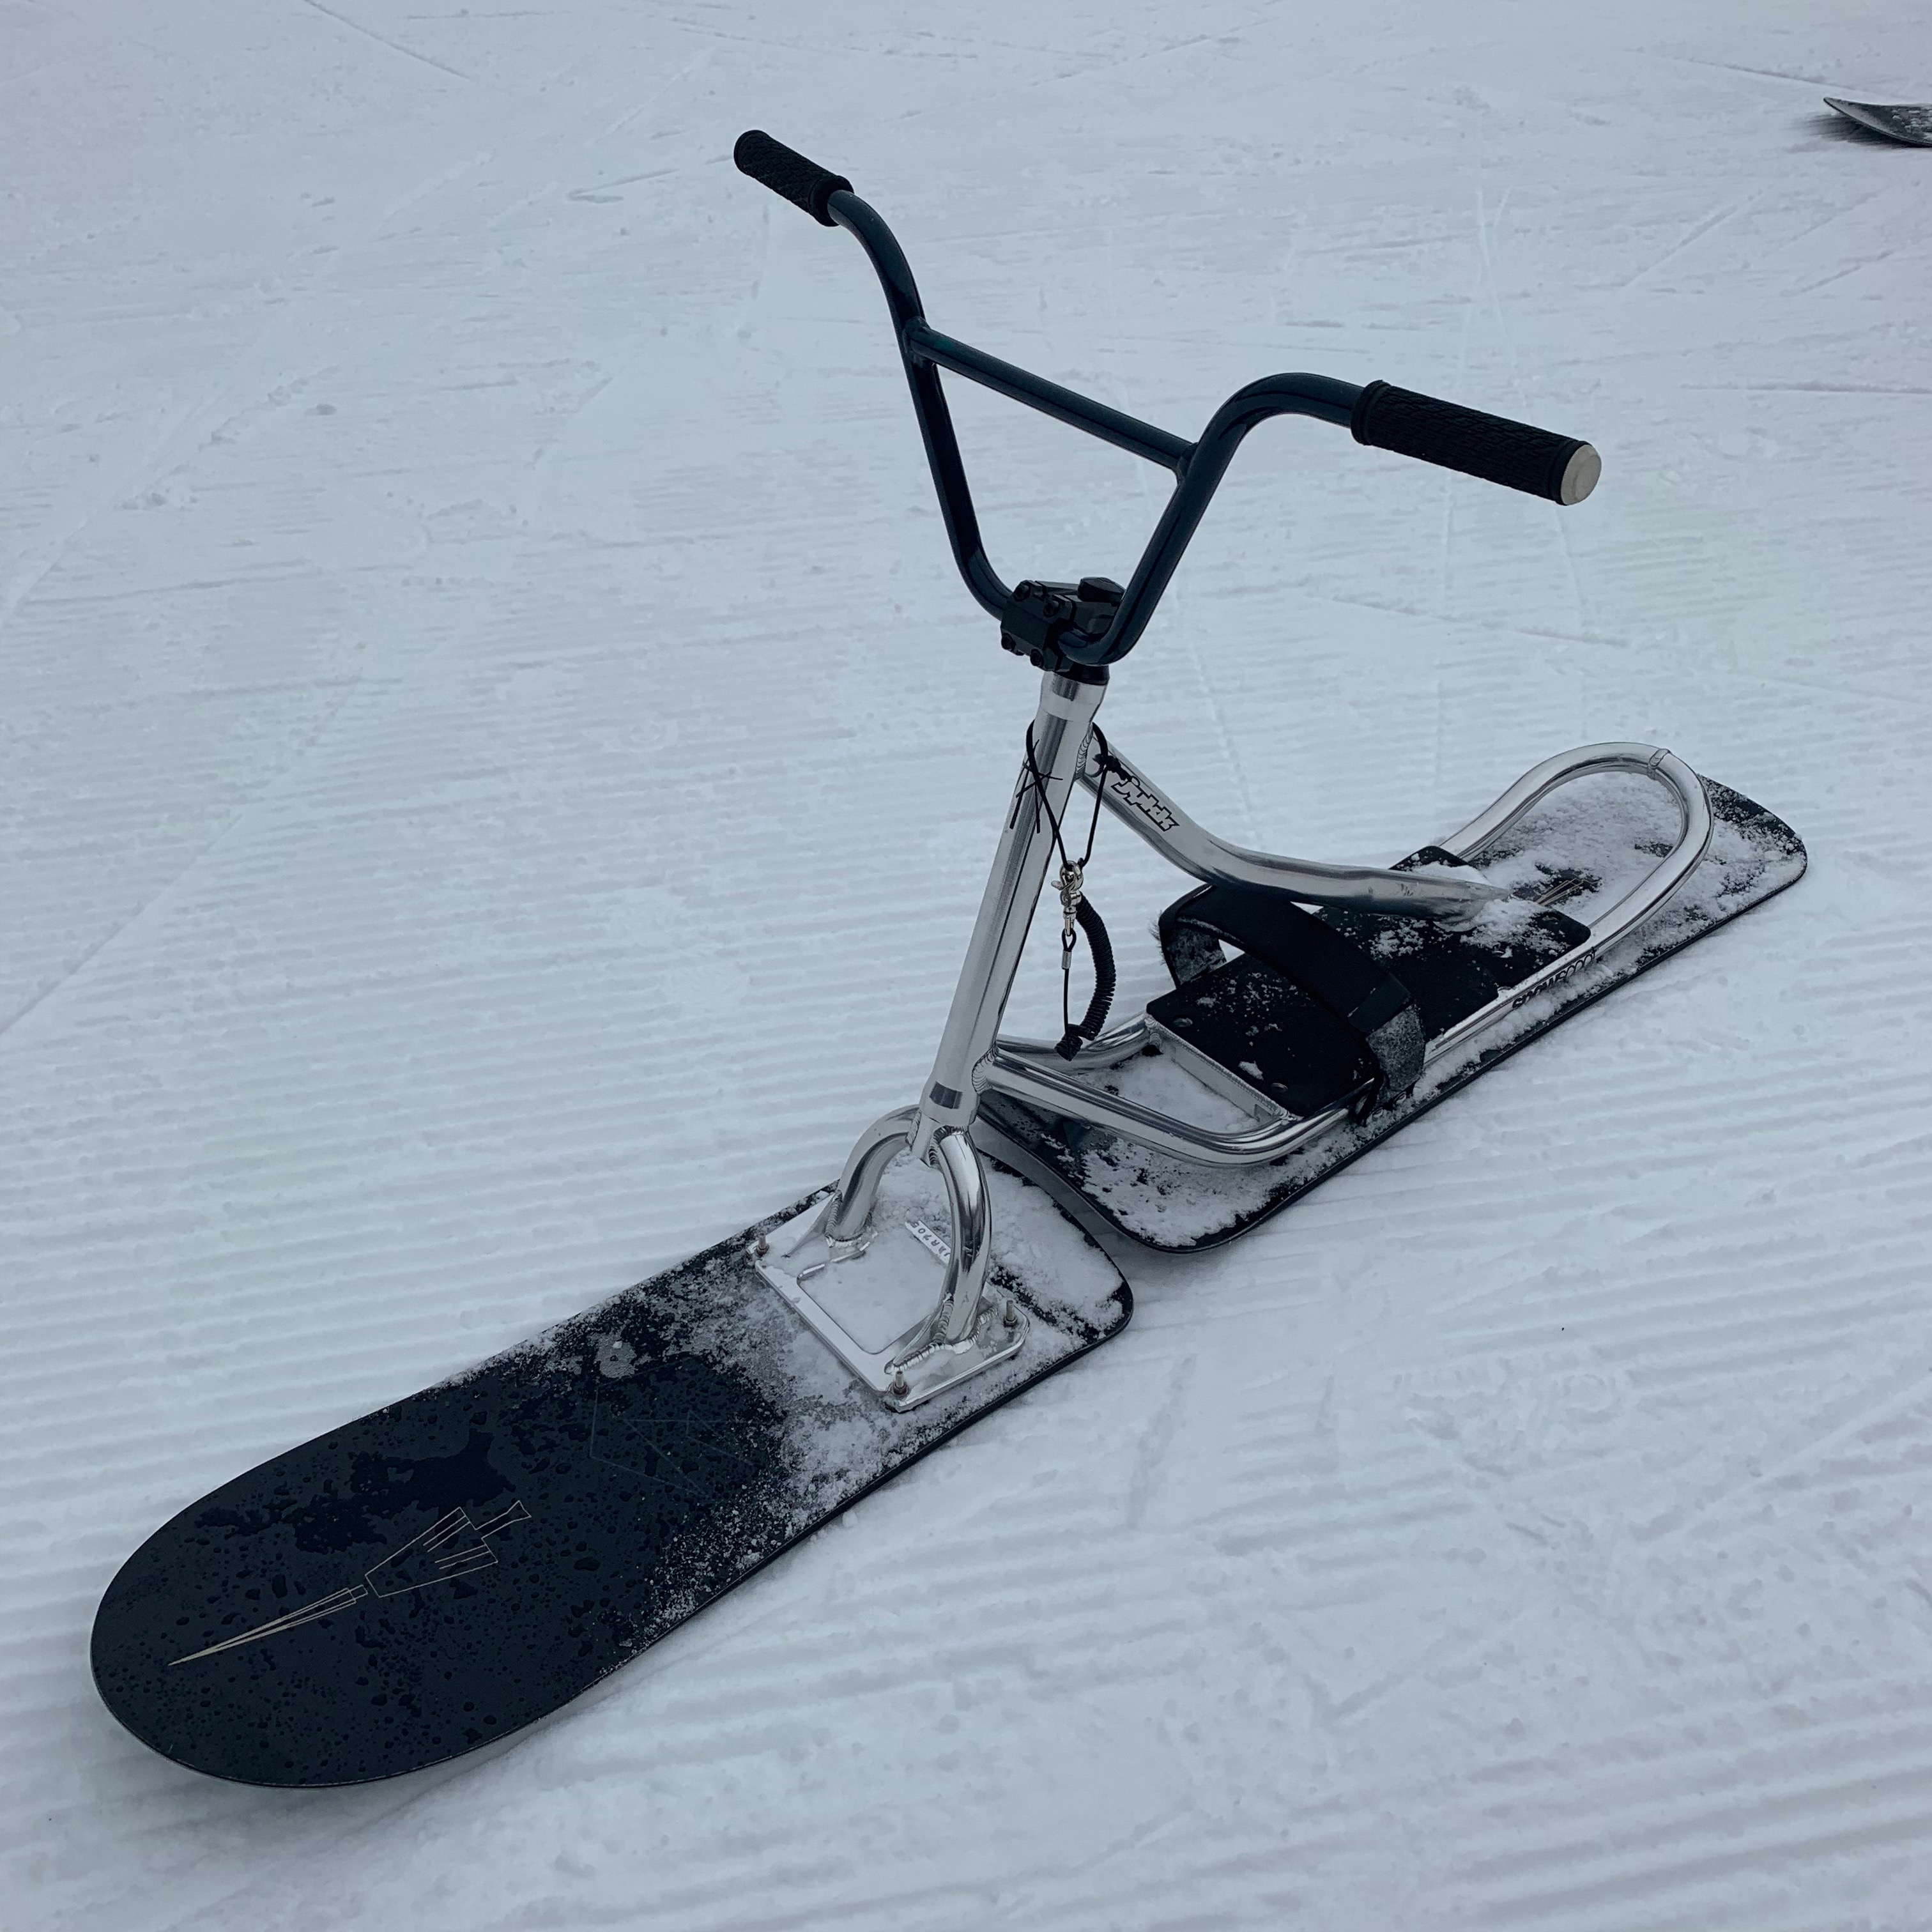 SNOWSCOOT 動画 スノースクート最新ボードセット TORINITY-SSSTテストライドムービー | TOOLATE SPORTS  トゥーレイトスポーツ 富山の自転車店 スノースクートプロショップ